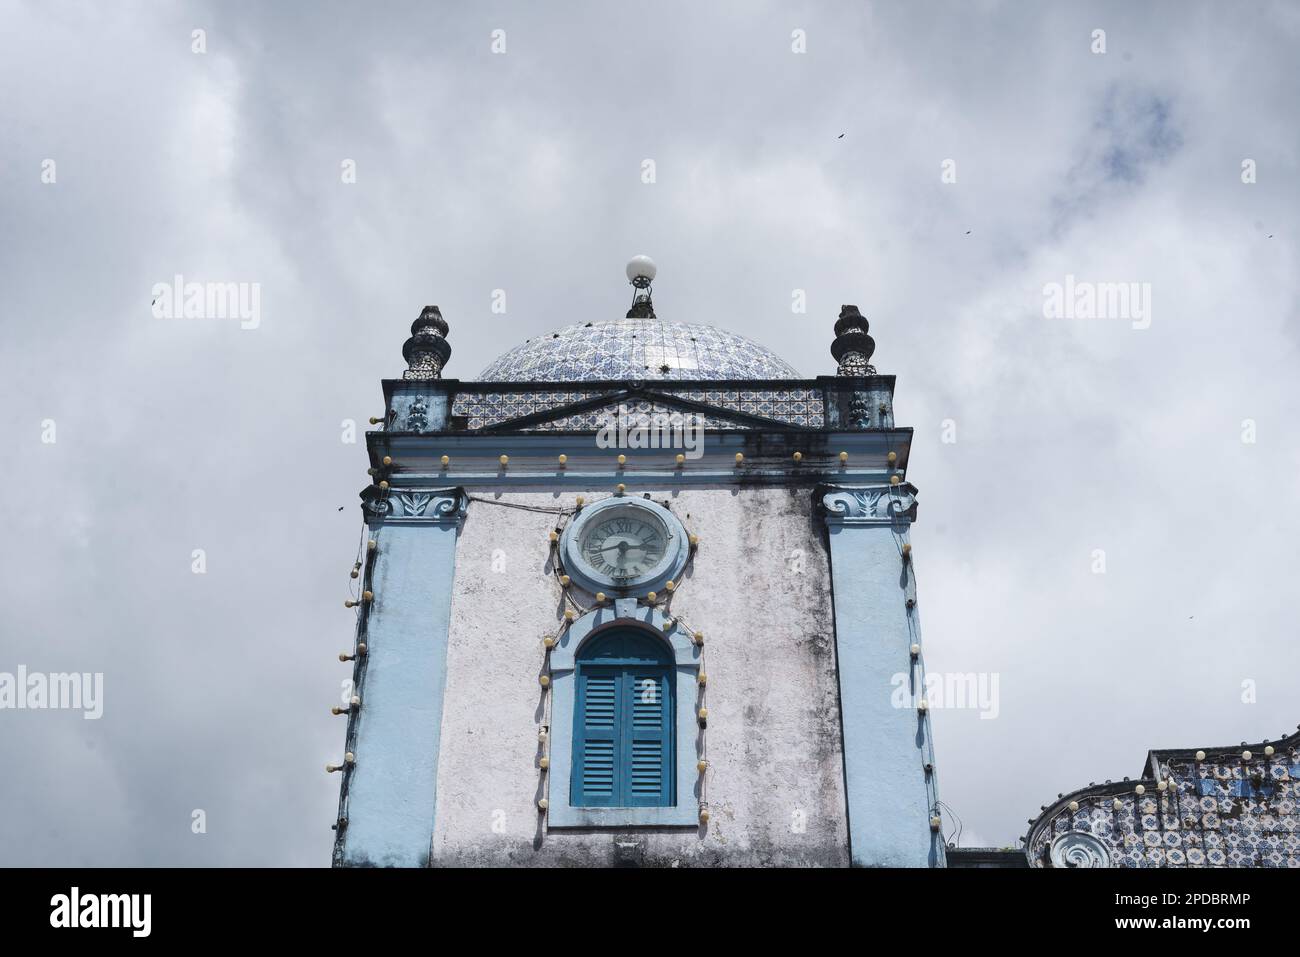 Valenca, Bahia, Brazil - September 10, 2022: View of one of the towers of the church of Nossa Senhora do Amparo in the city of Valenca, Bahia. Stock Photo